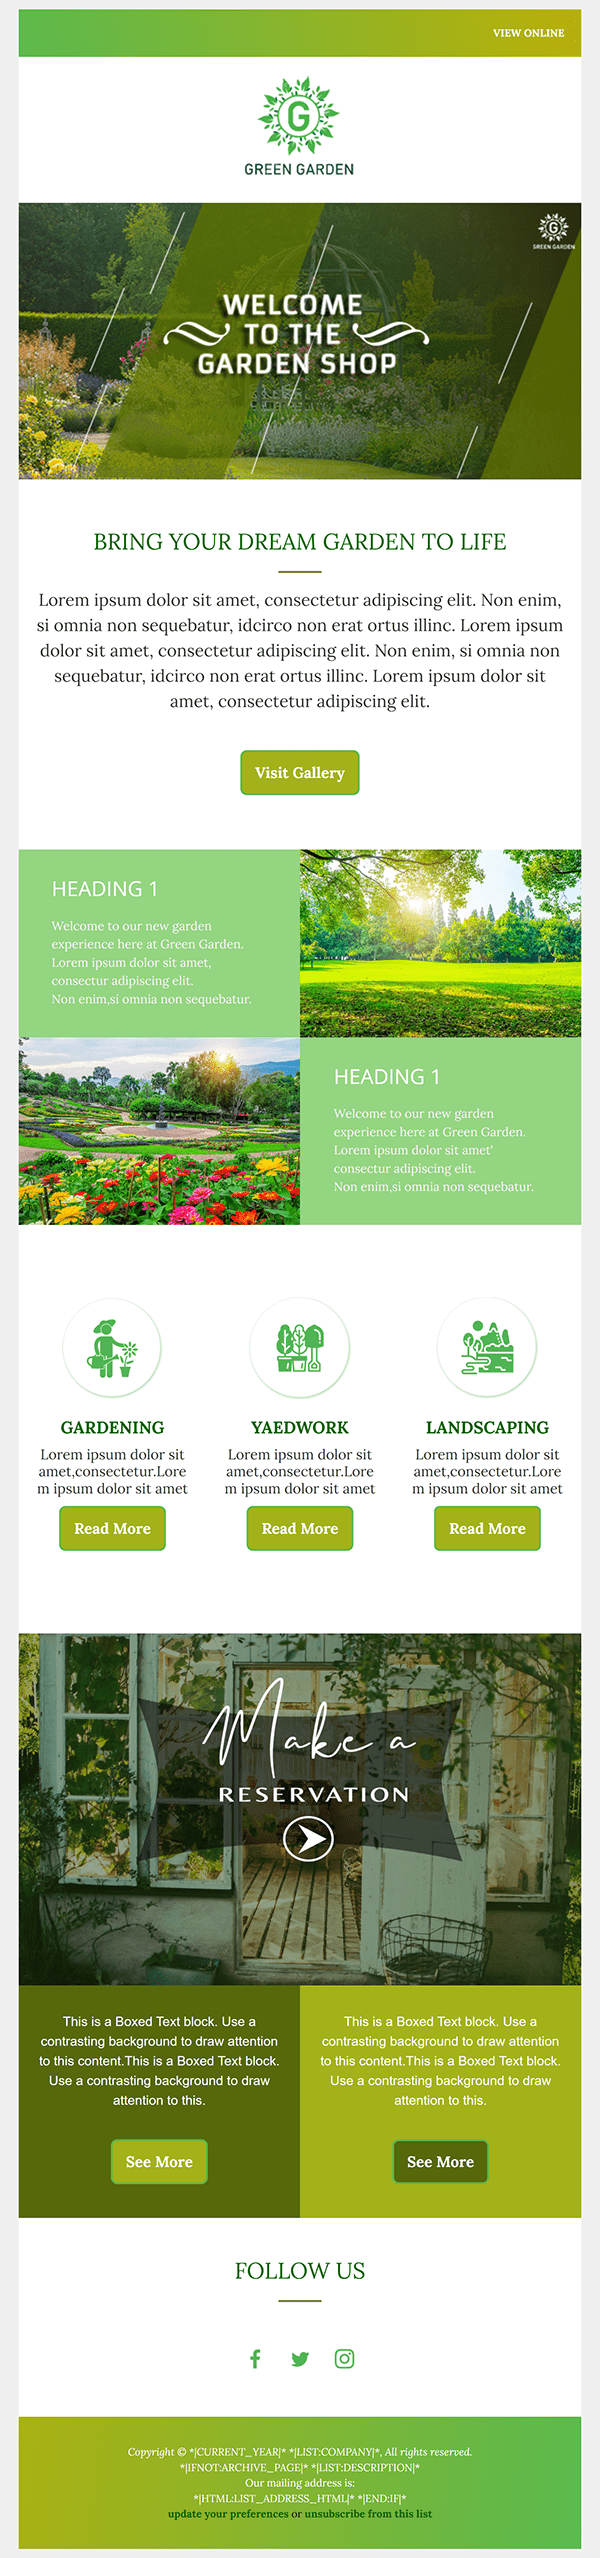 Email Template Newsletter on Garden Shop